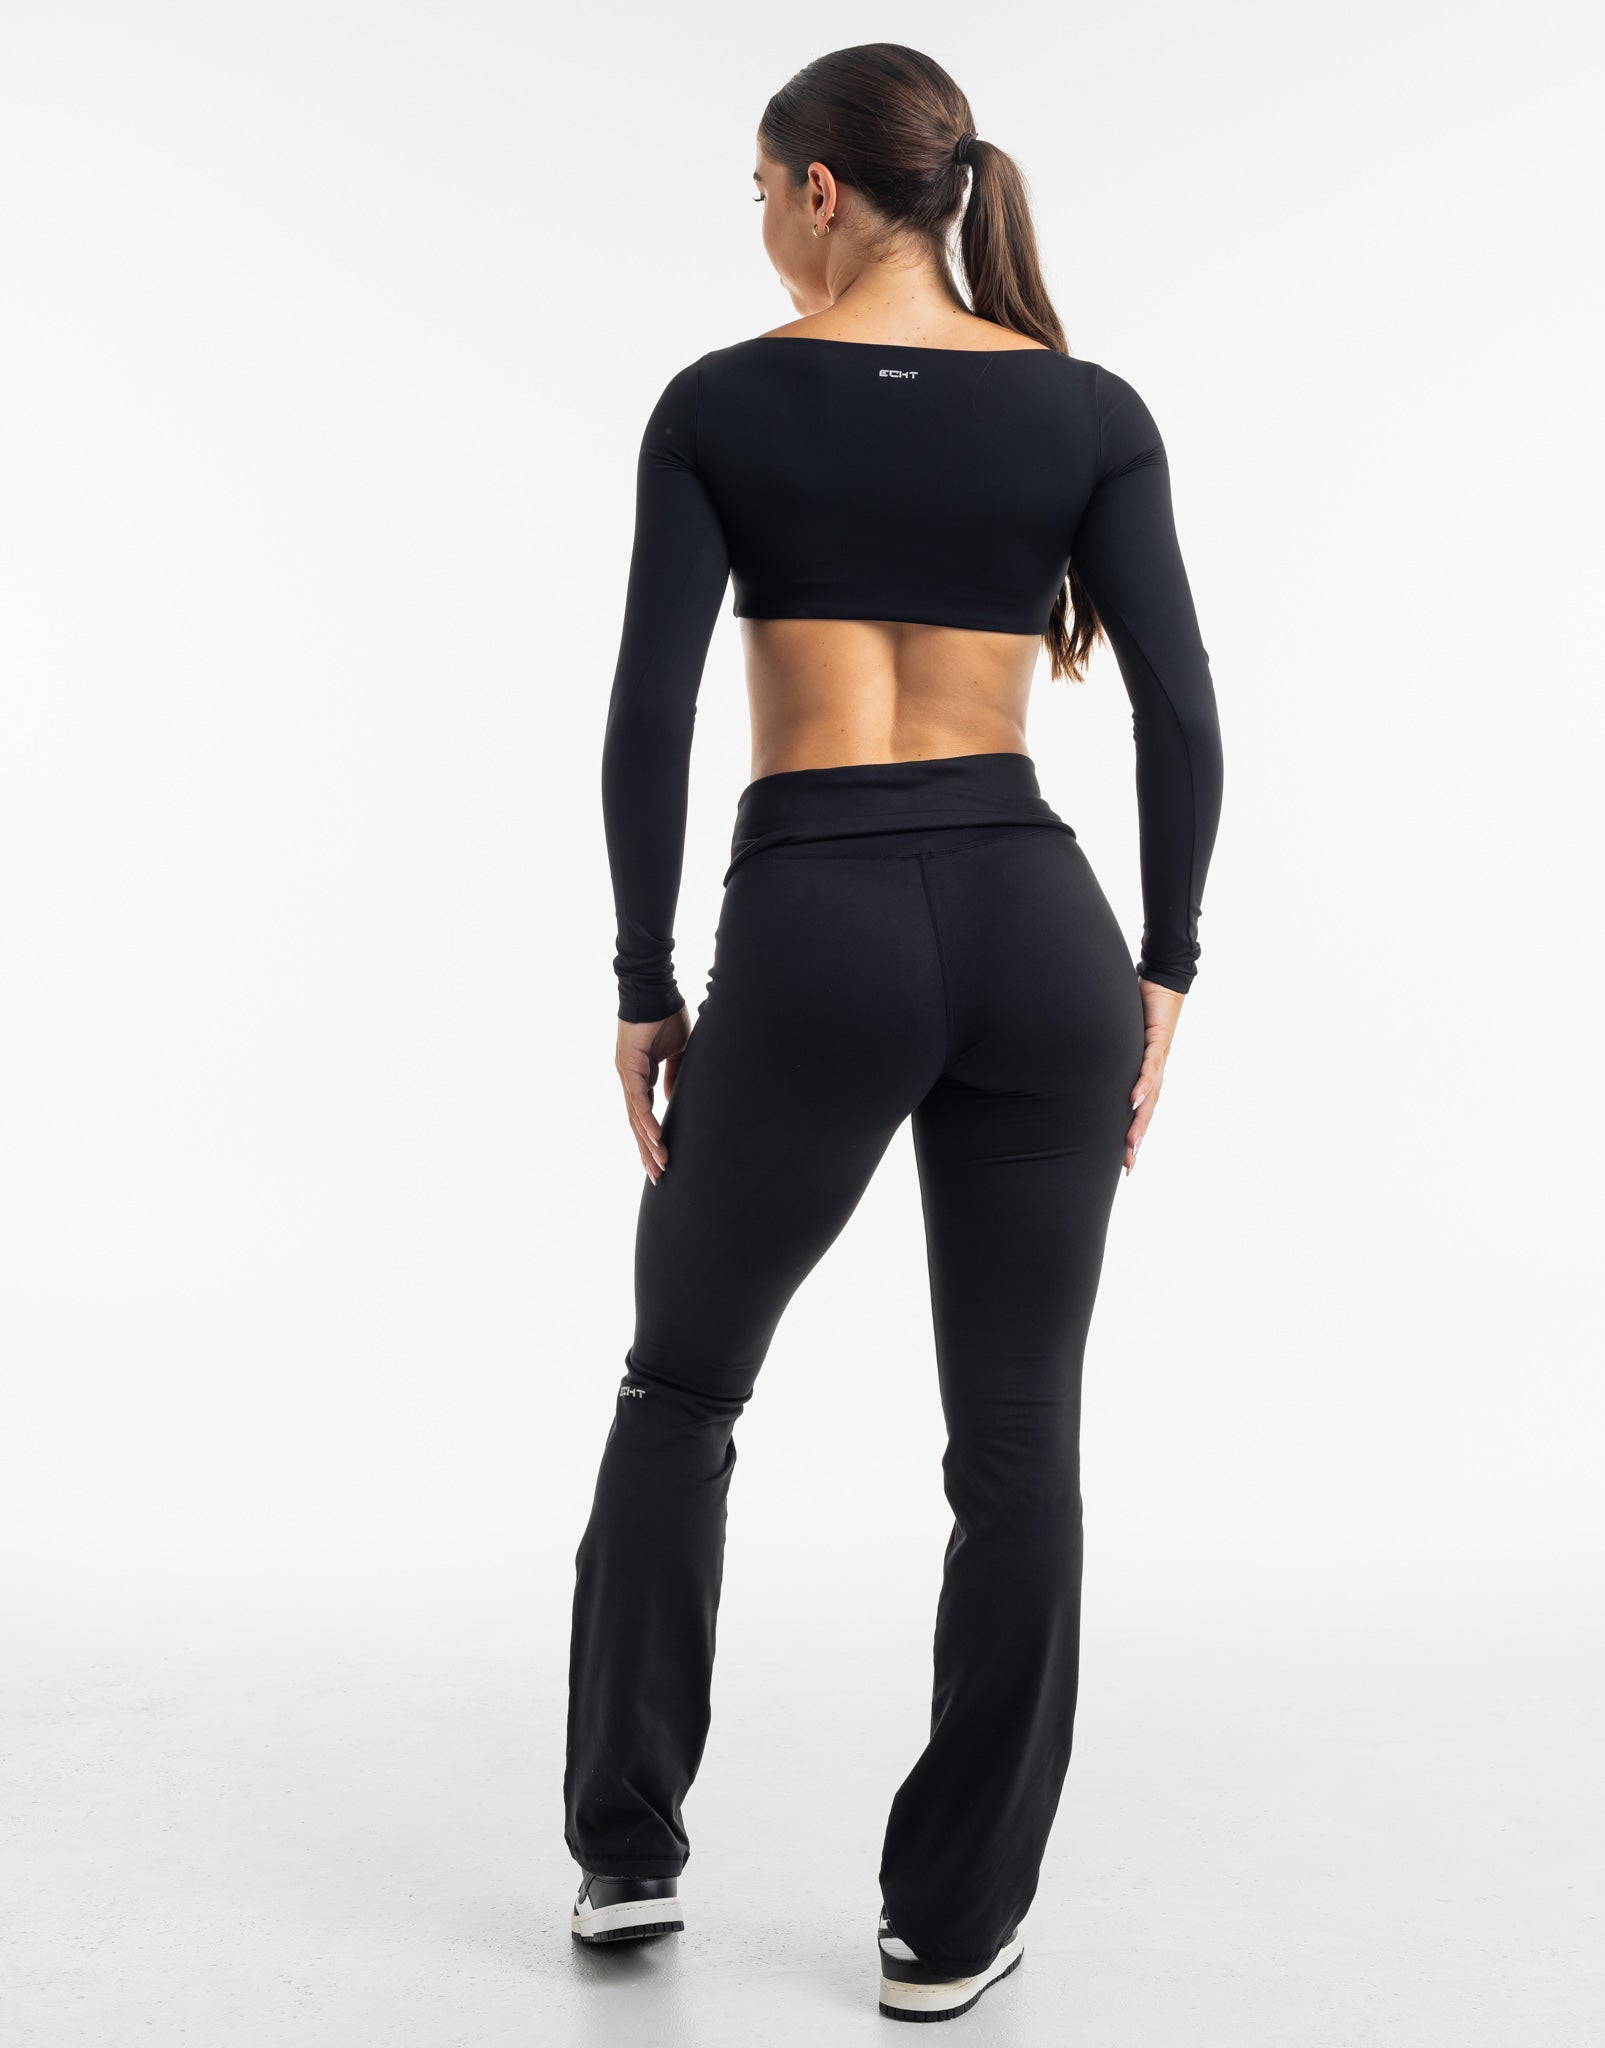 Fold-over Yoga Pants - black